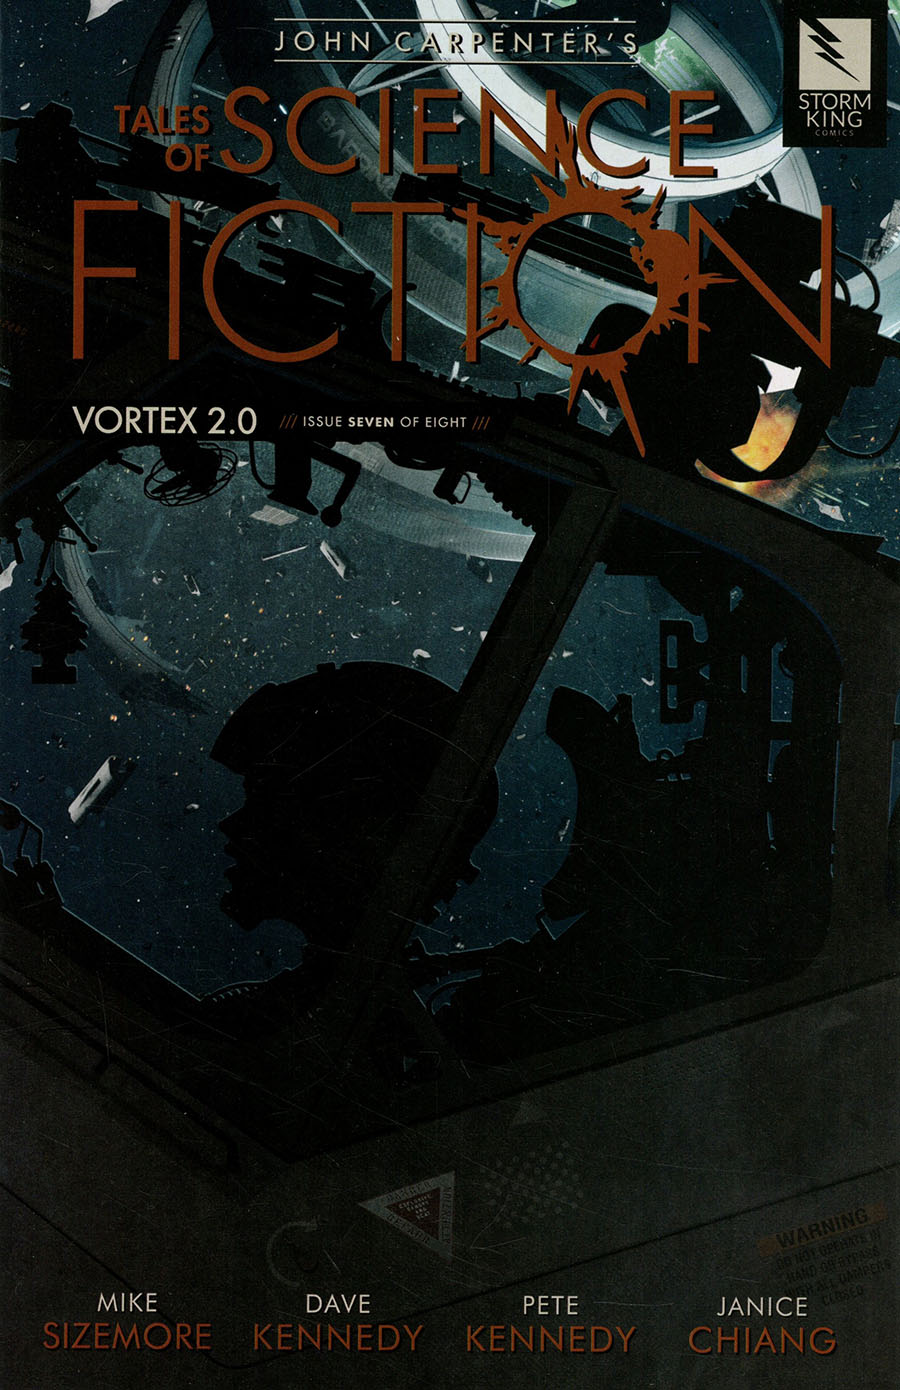 John Carpenters Tales Of Science Fiction Vortex 2.0 #7